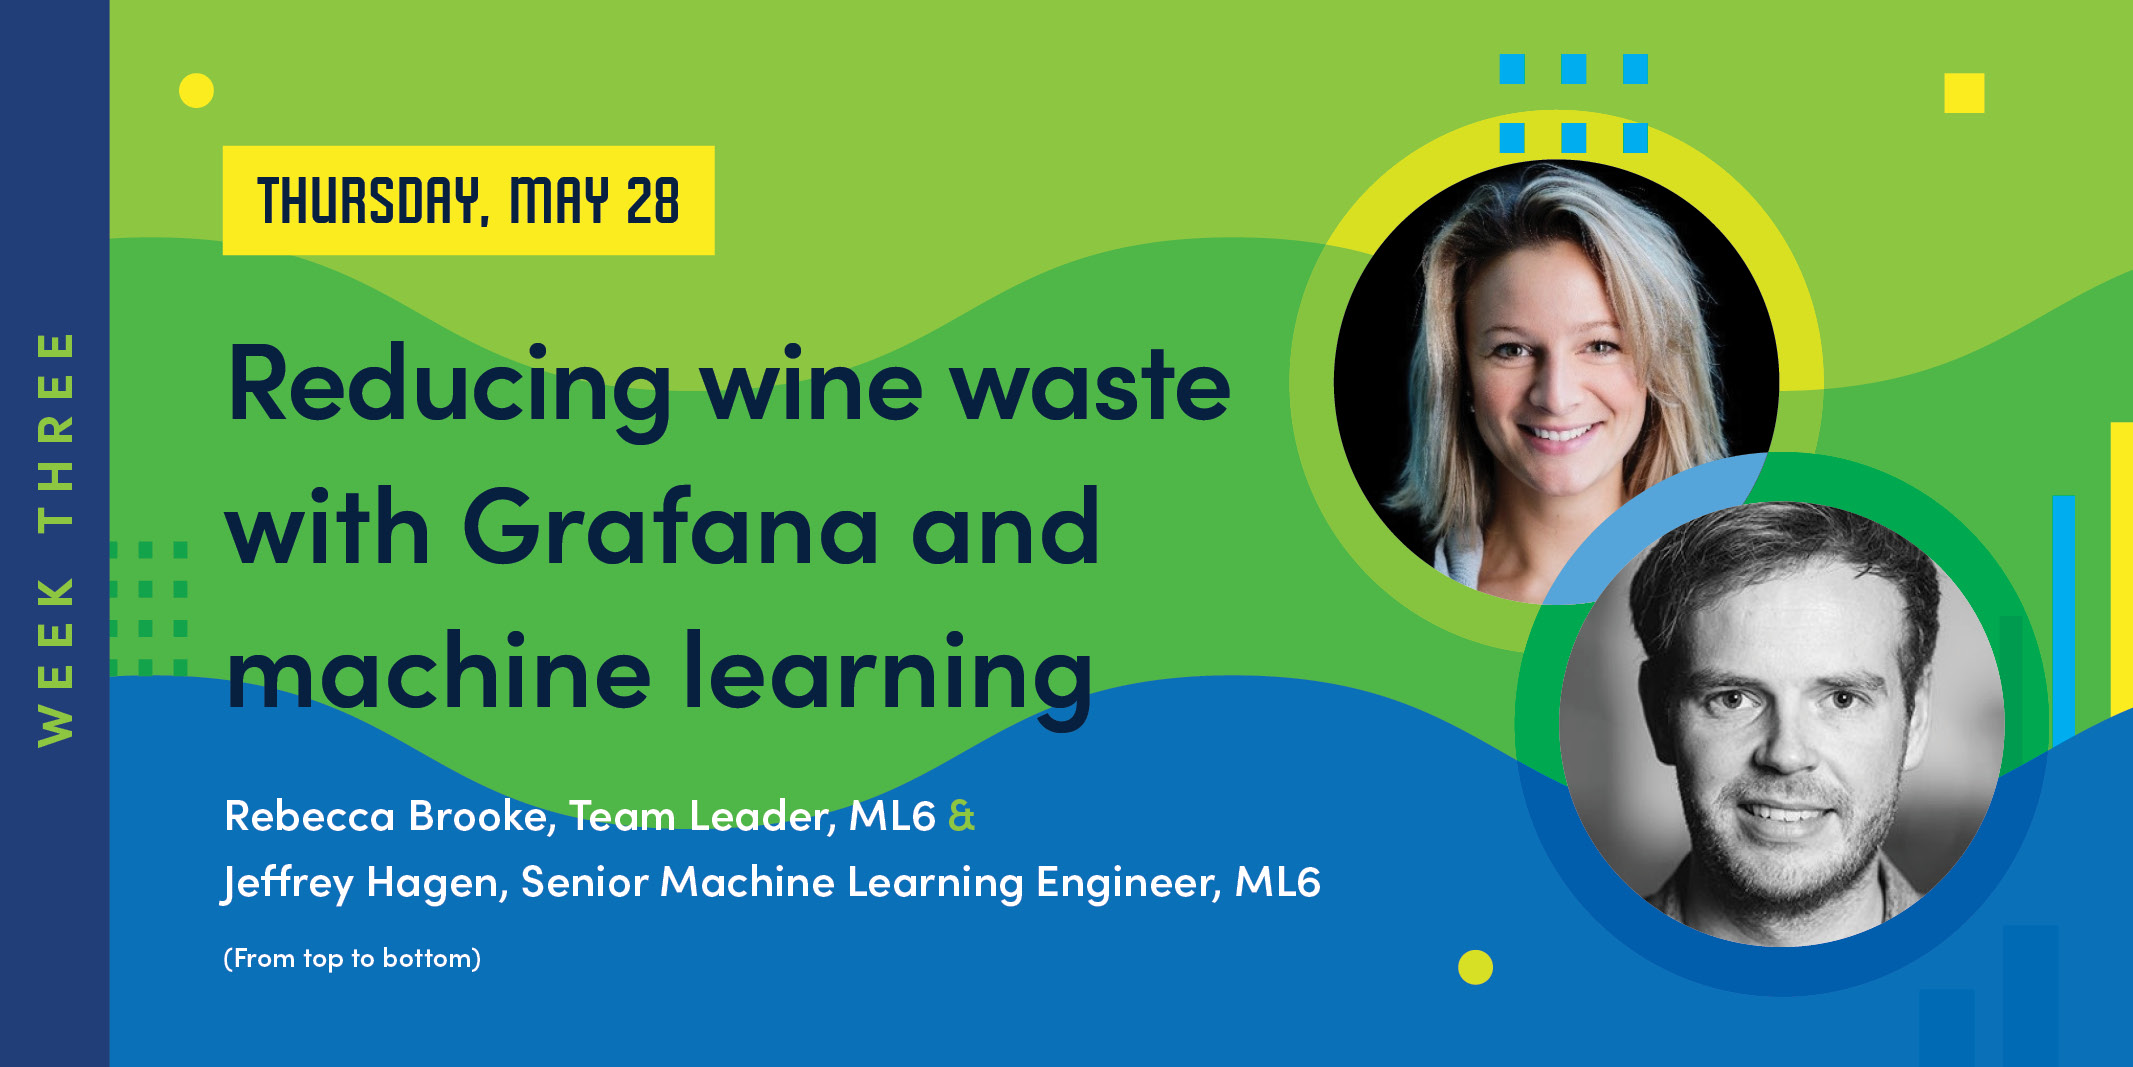 Reducing wine waste with Grafana and machine learning  - GrafanaCONline